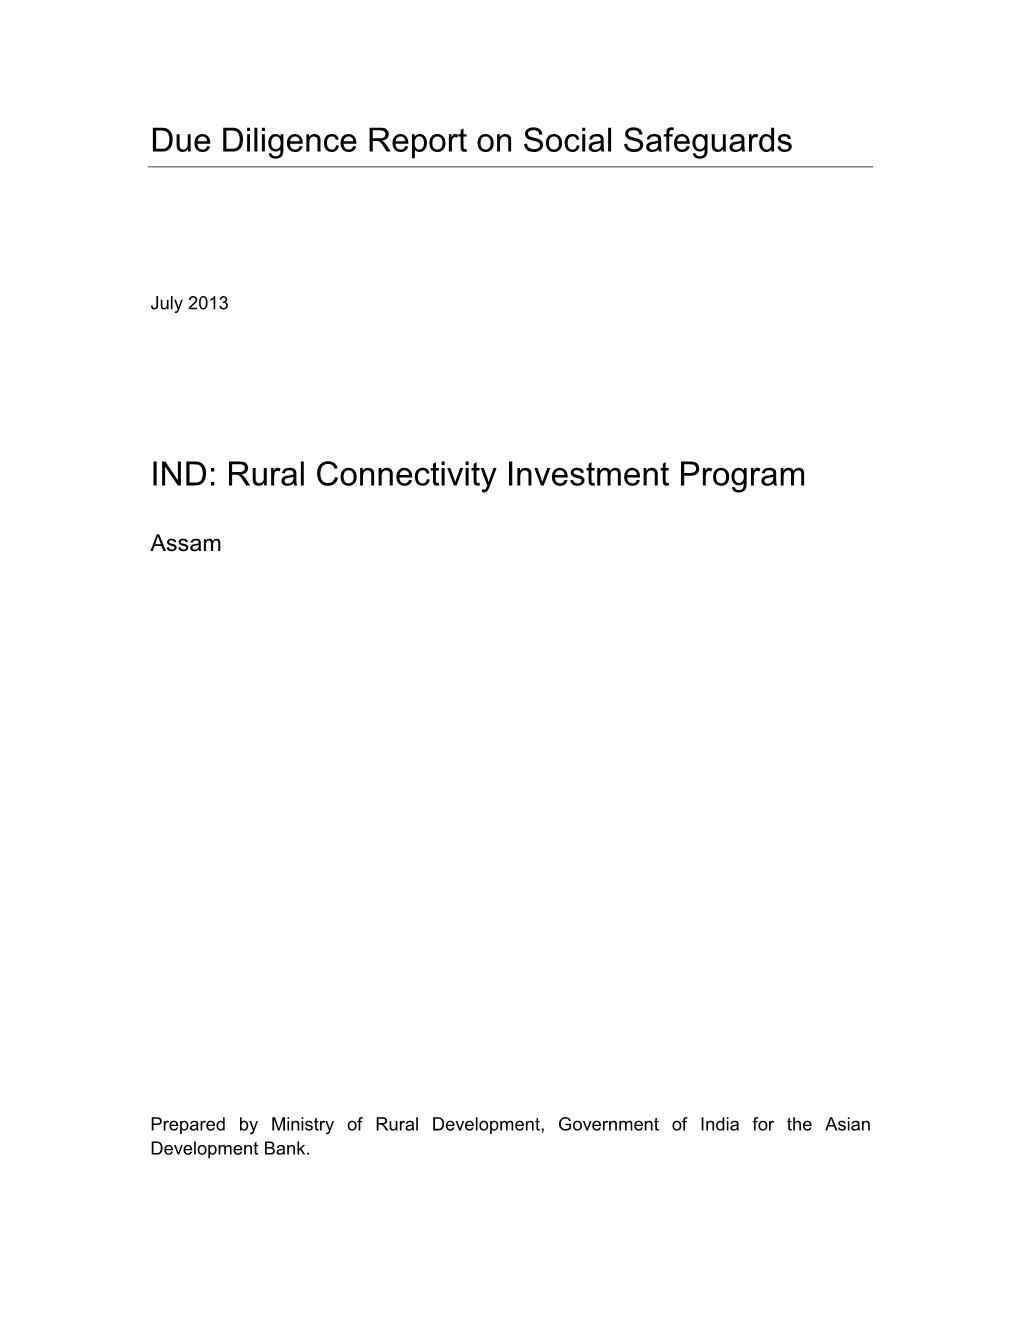 IND: Rural Connectivity Investment Program